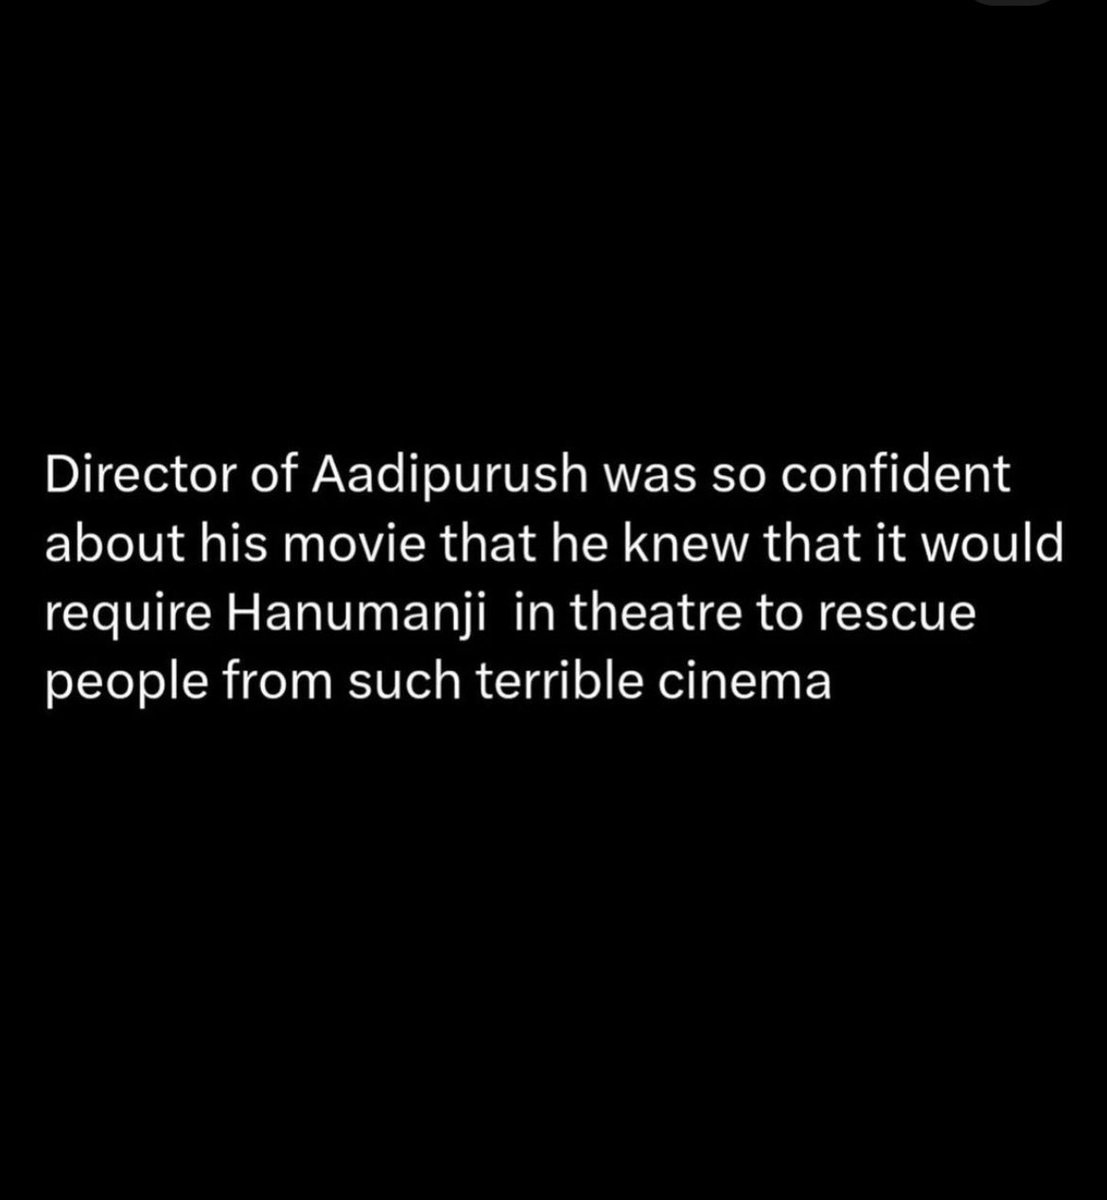 #AadiPurushDisaster